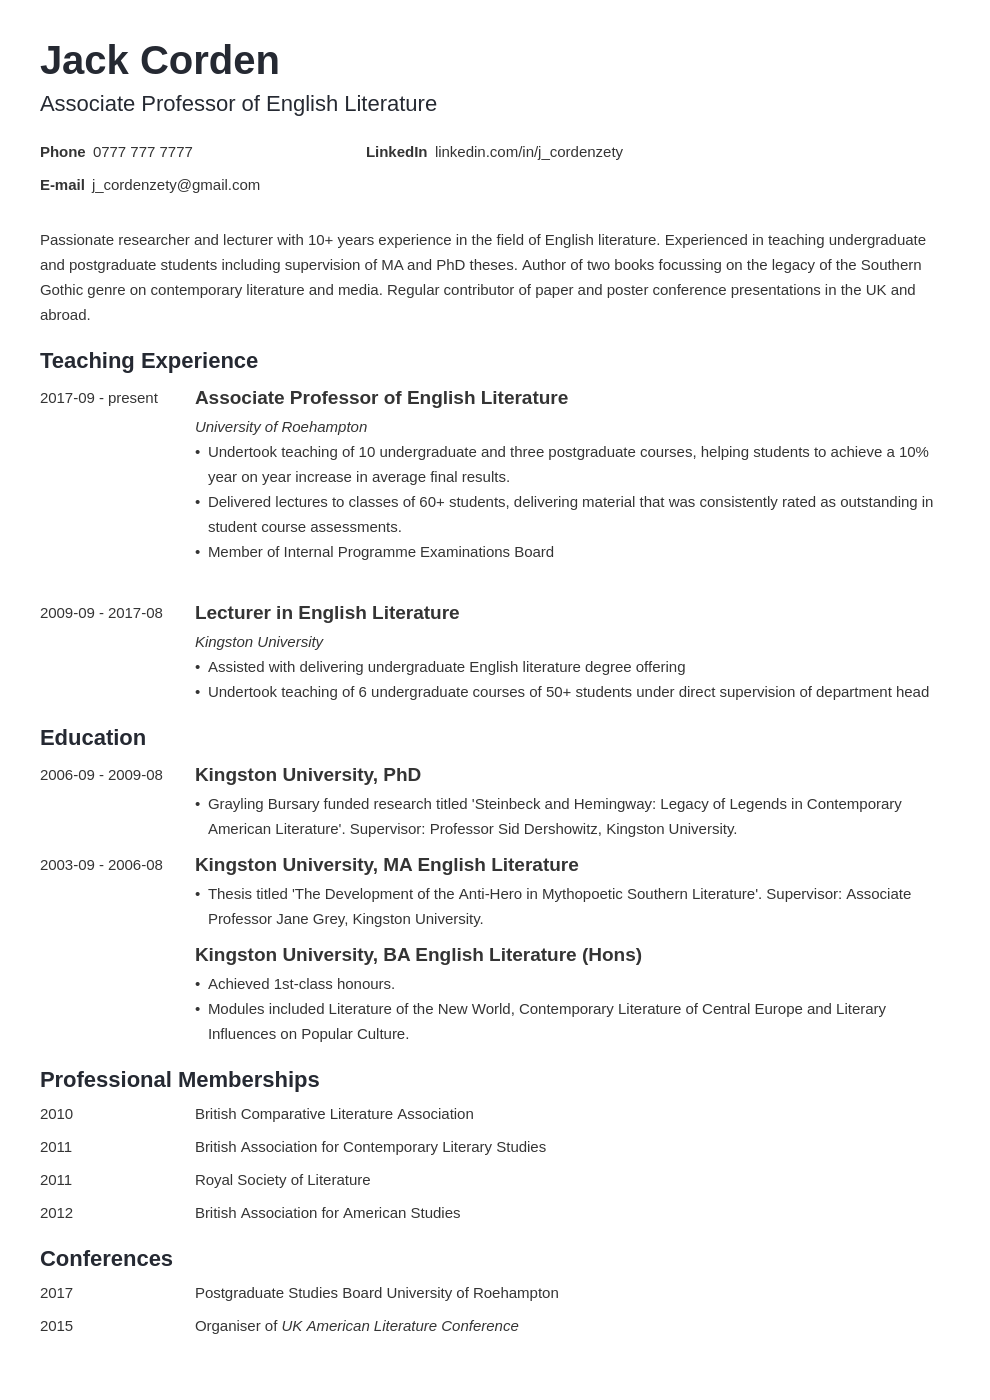 Academic (CV) Curriculum Vitae: Template, Examples & Guide